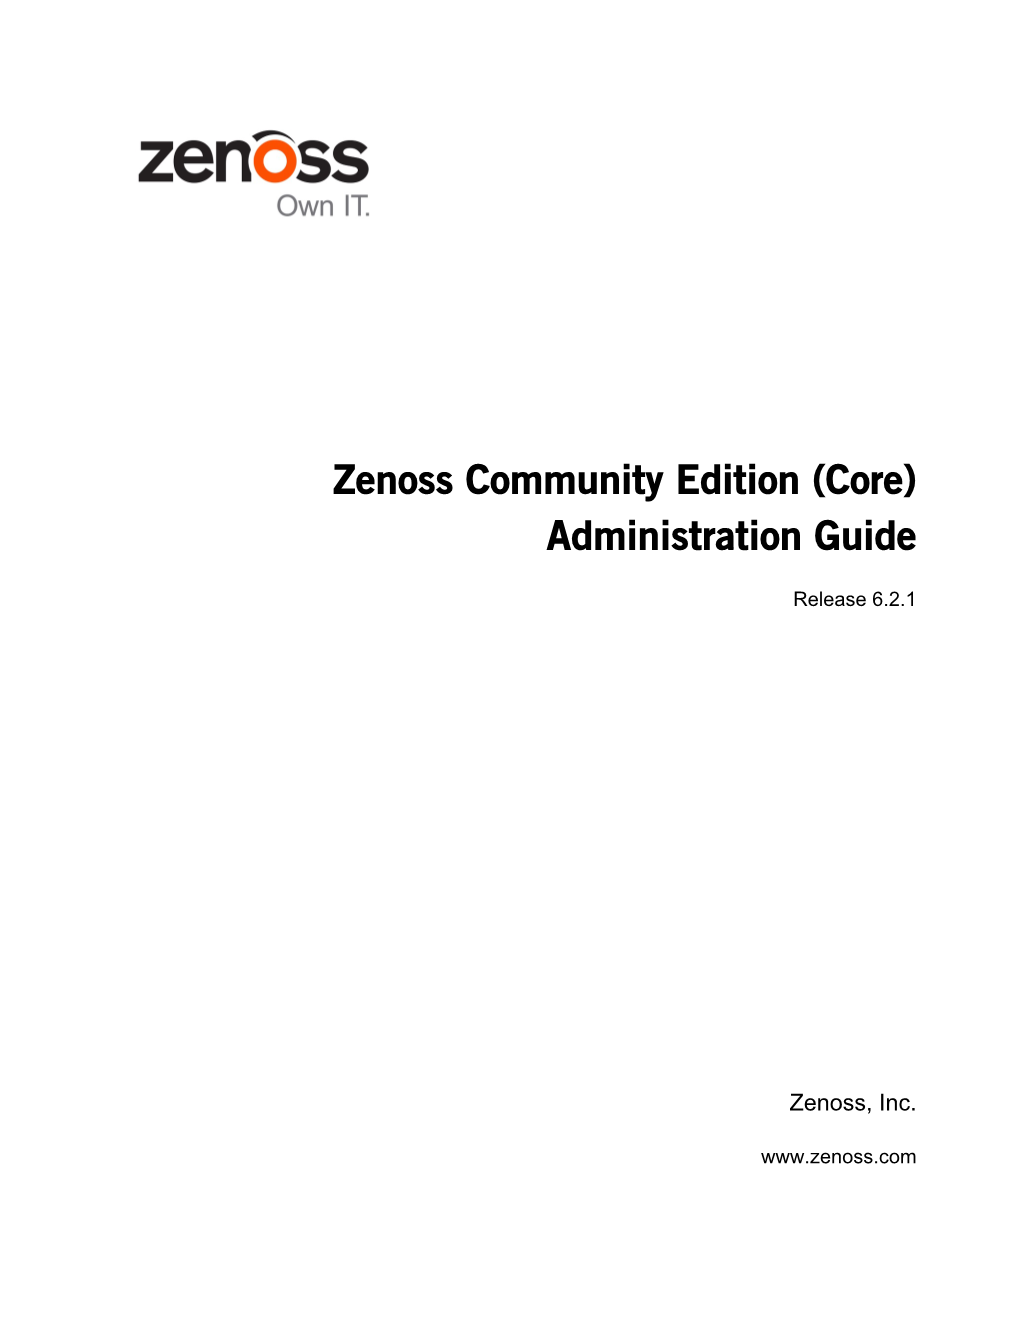 Zenoss Community Edition (Core) Administration Guide